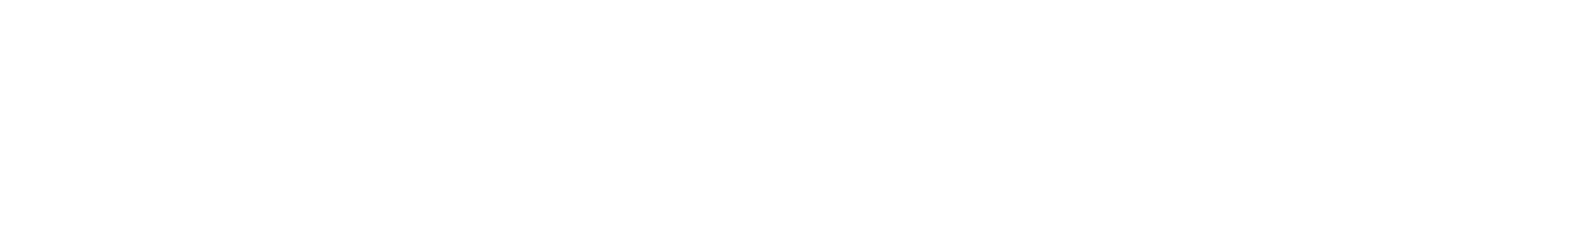 Goodhue Repairs logo